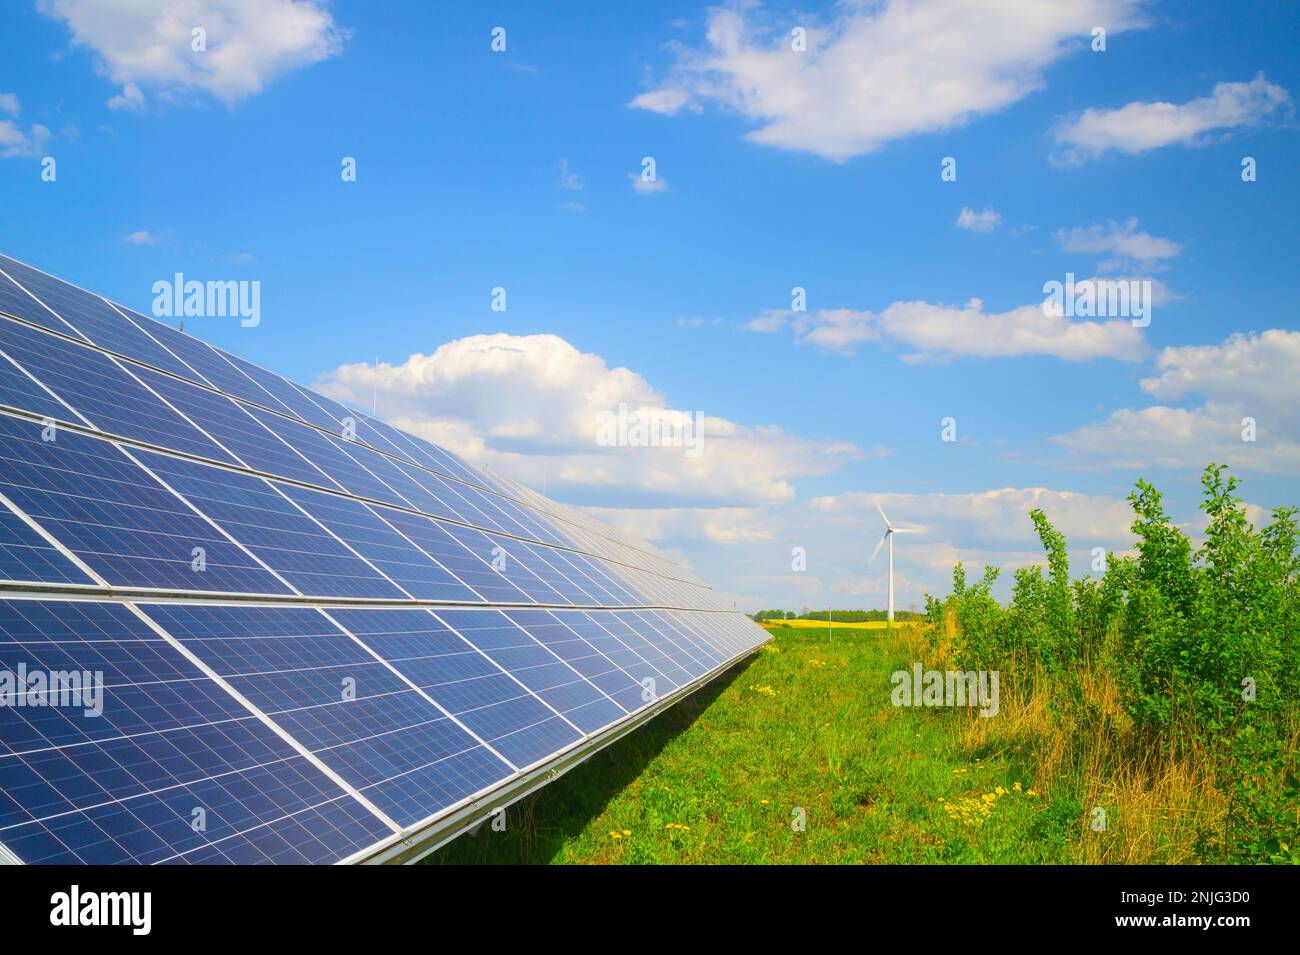 Alternative energy - solar panel and wind generator Stock Photo